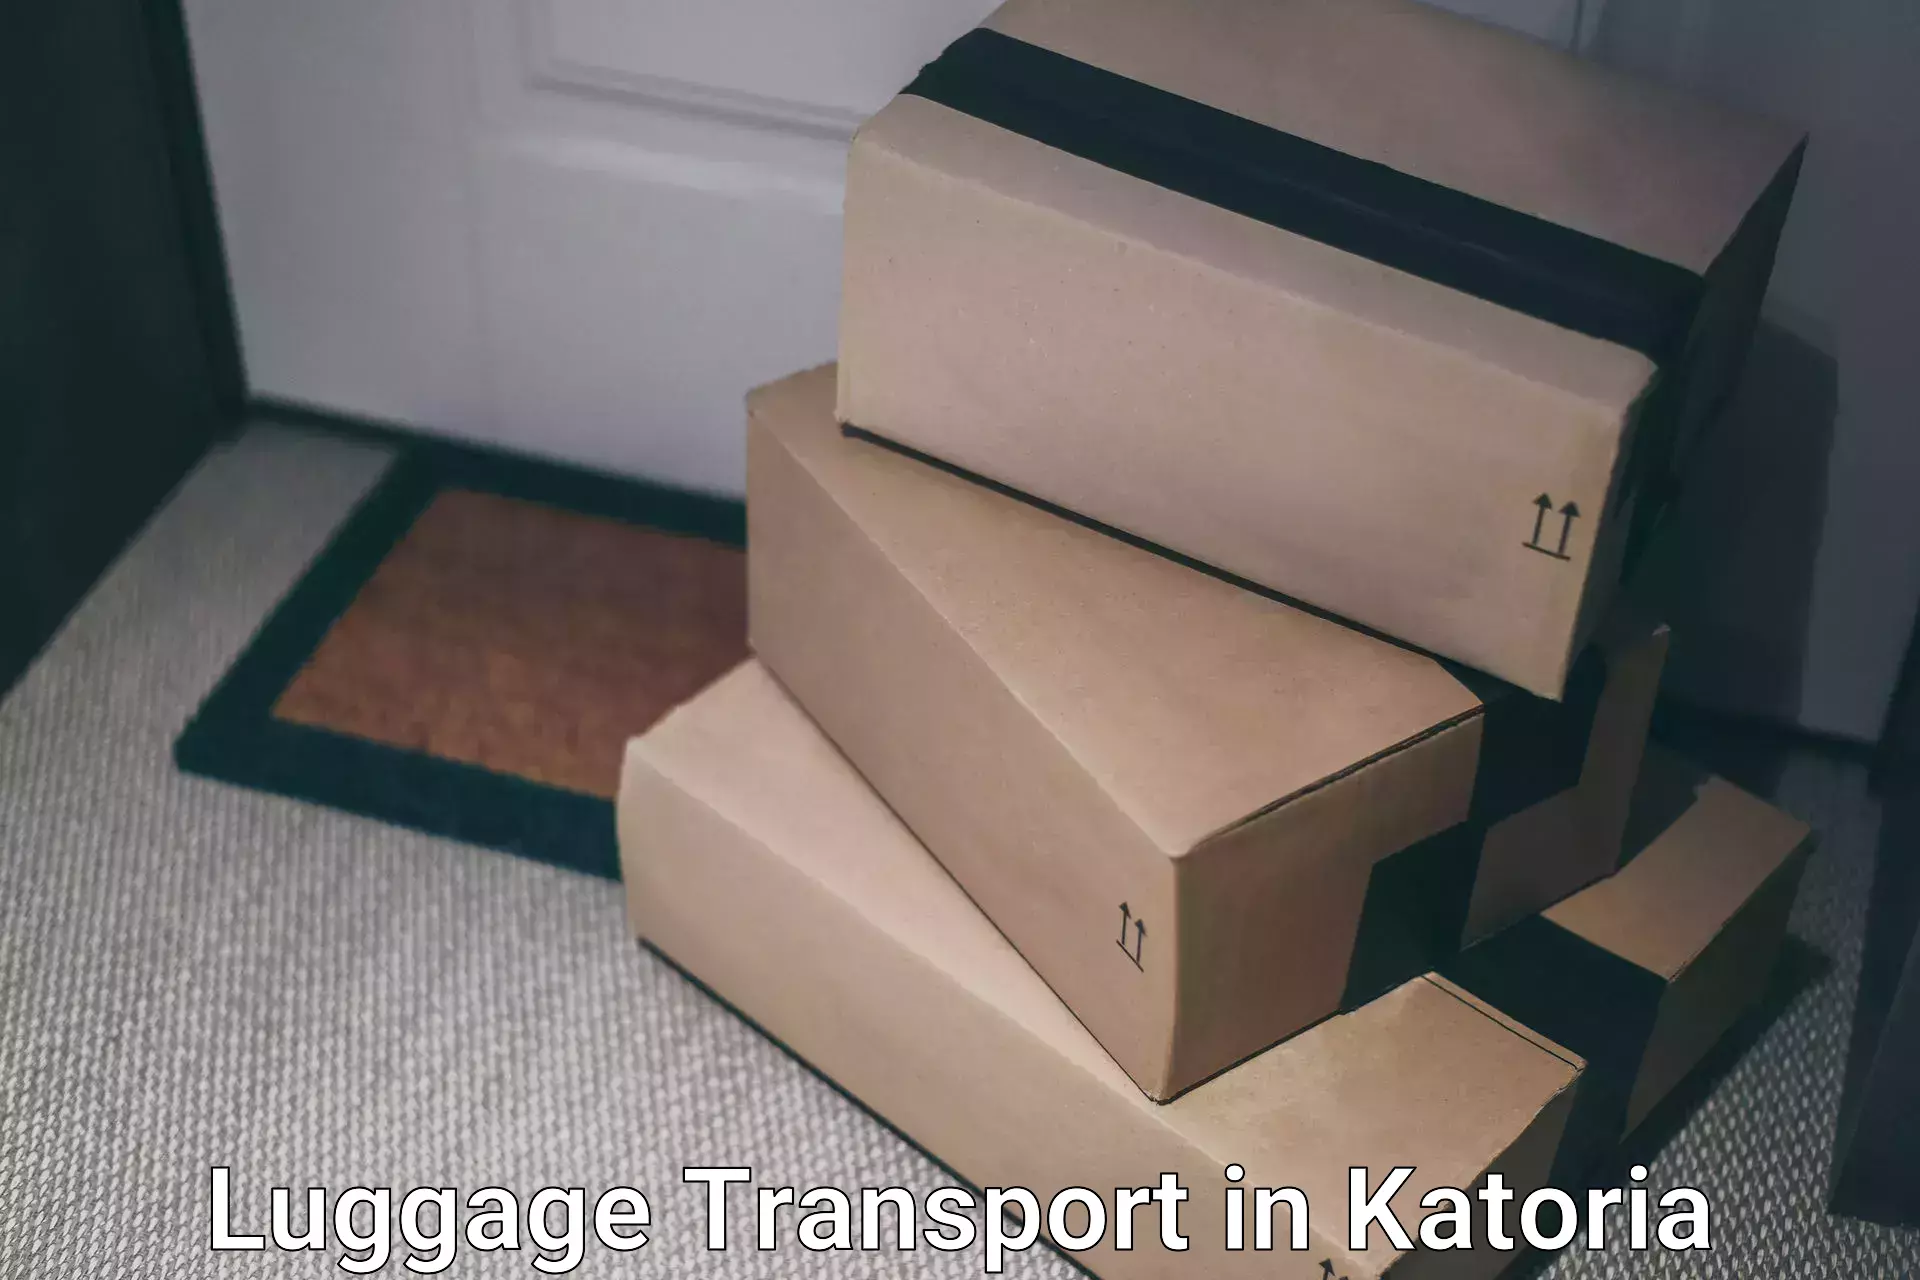 Luggage shipment processing in Katoria